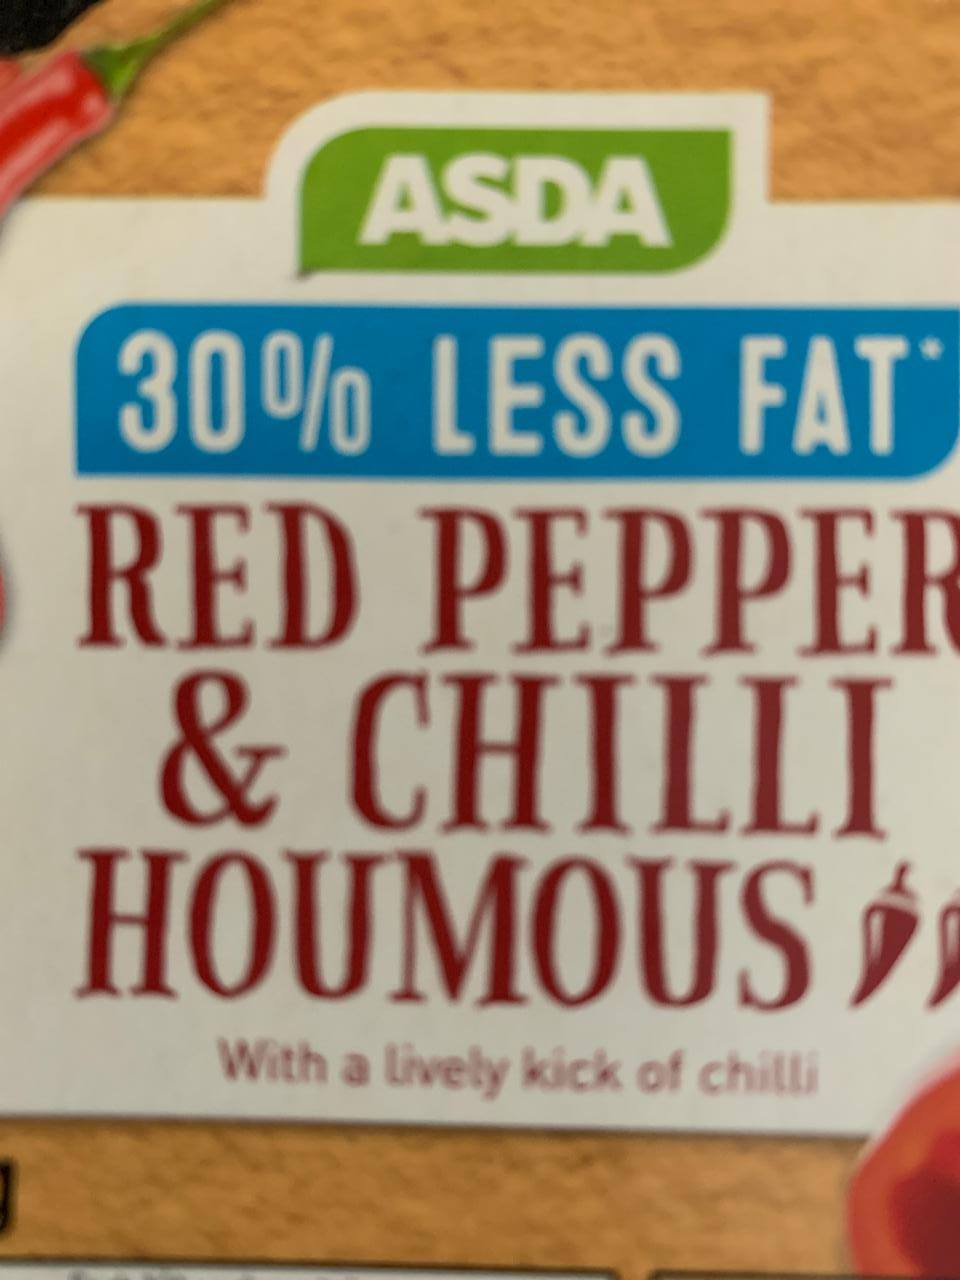 Fotografie - 30% less fat Red pepper & chilli Houmous Asda